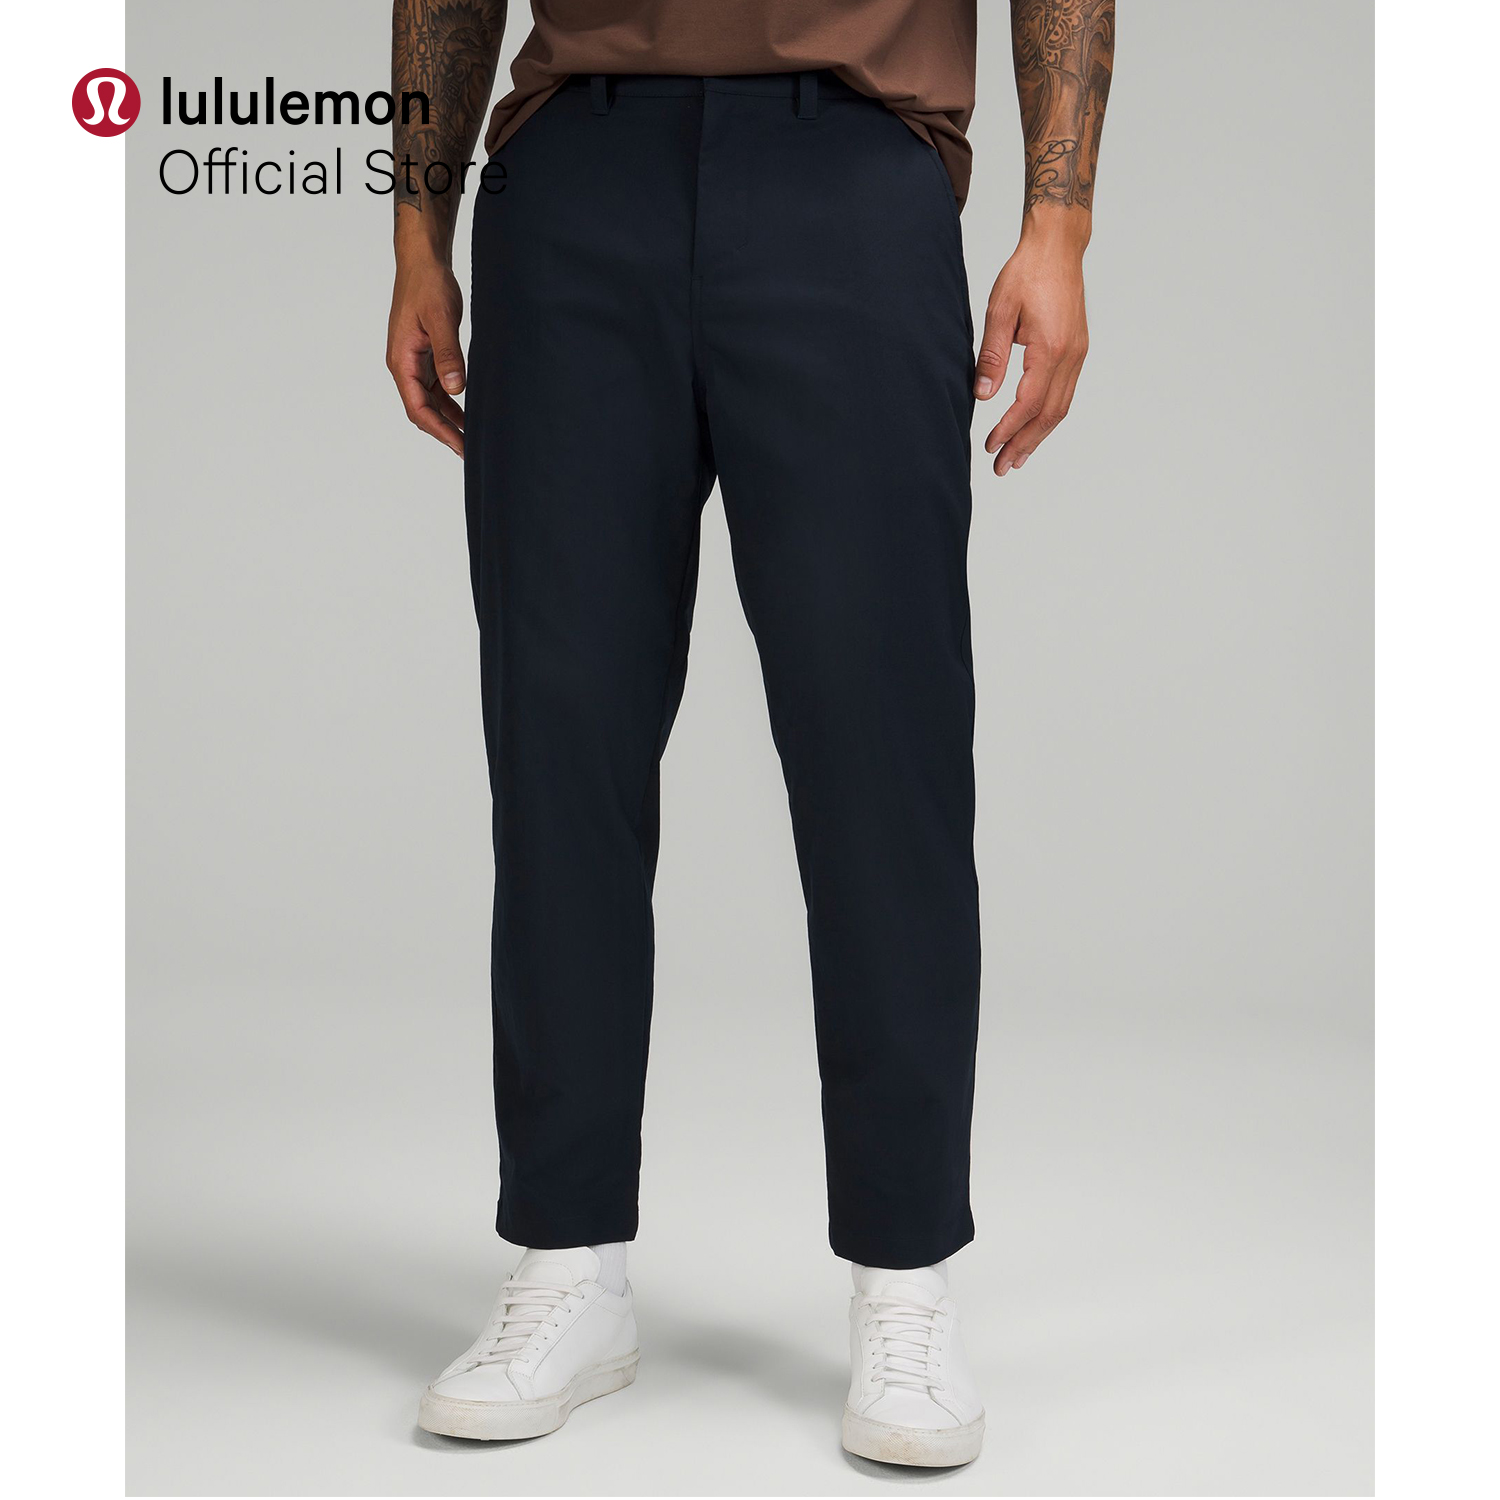 Lululemon Move Lightly Pant Grey  Clothes design, Pants, Lululemon